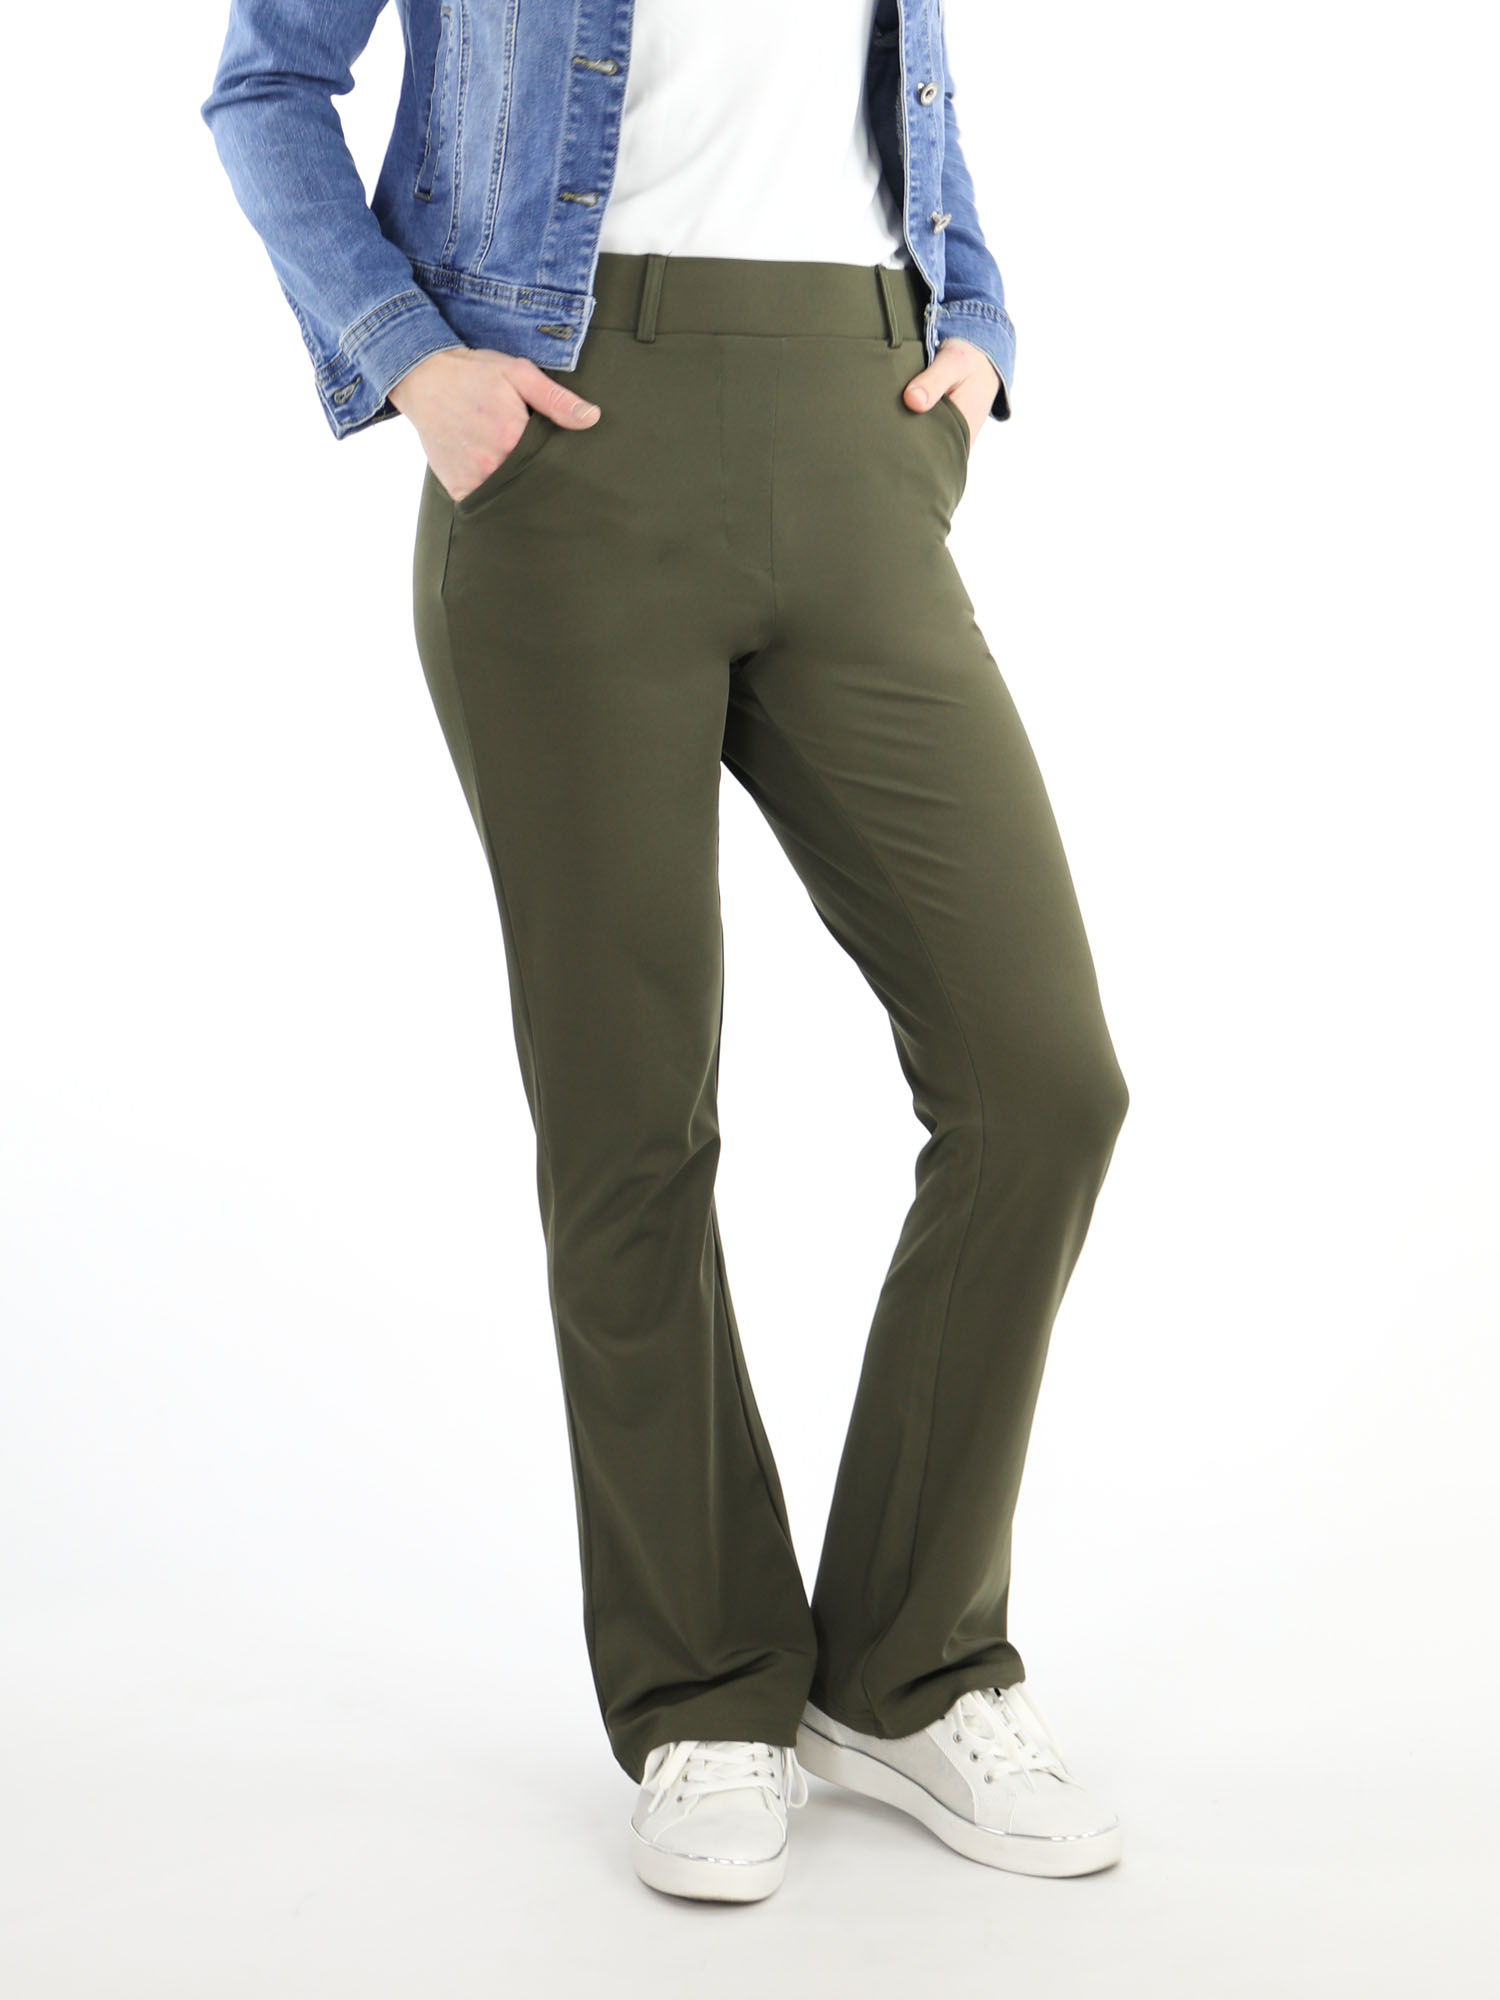 Ruwe olie Reusachtig eenvoudig Army groene flared travelstof broek van Thombiq - Fashion to Fashion